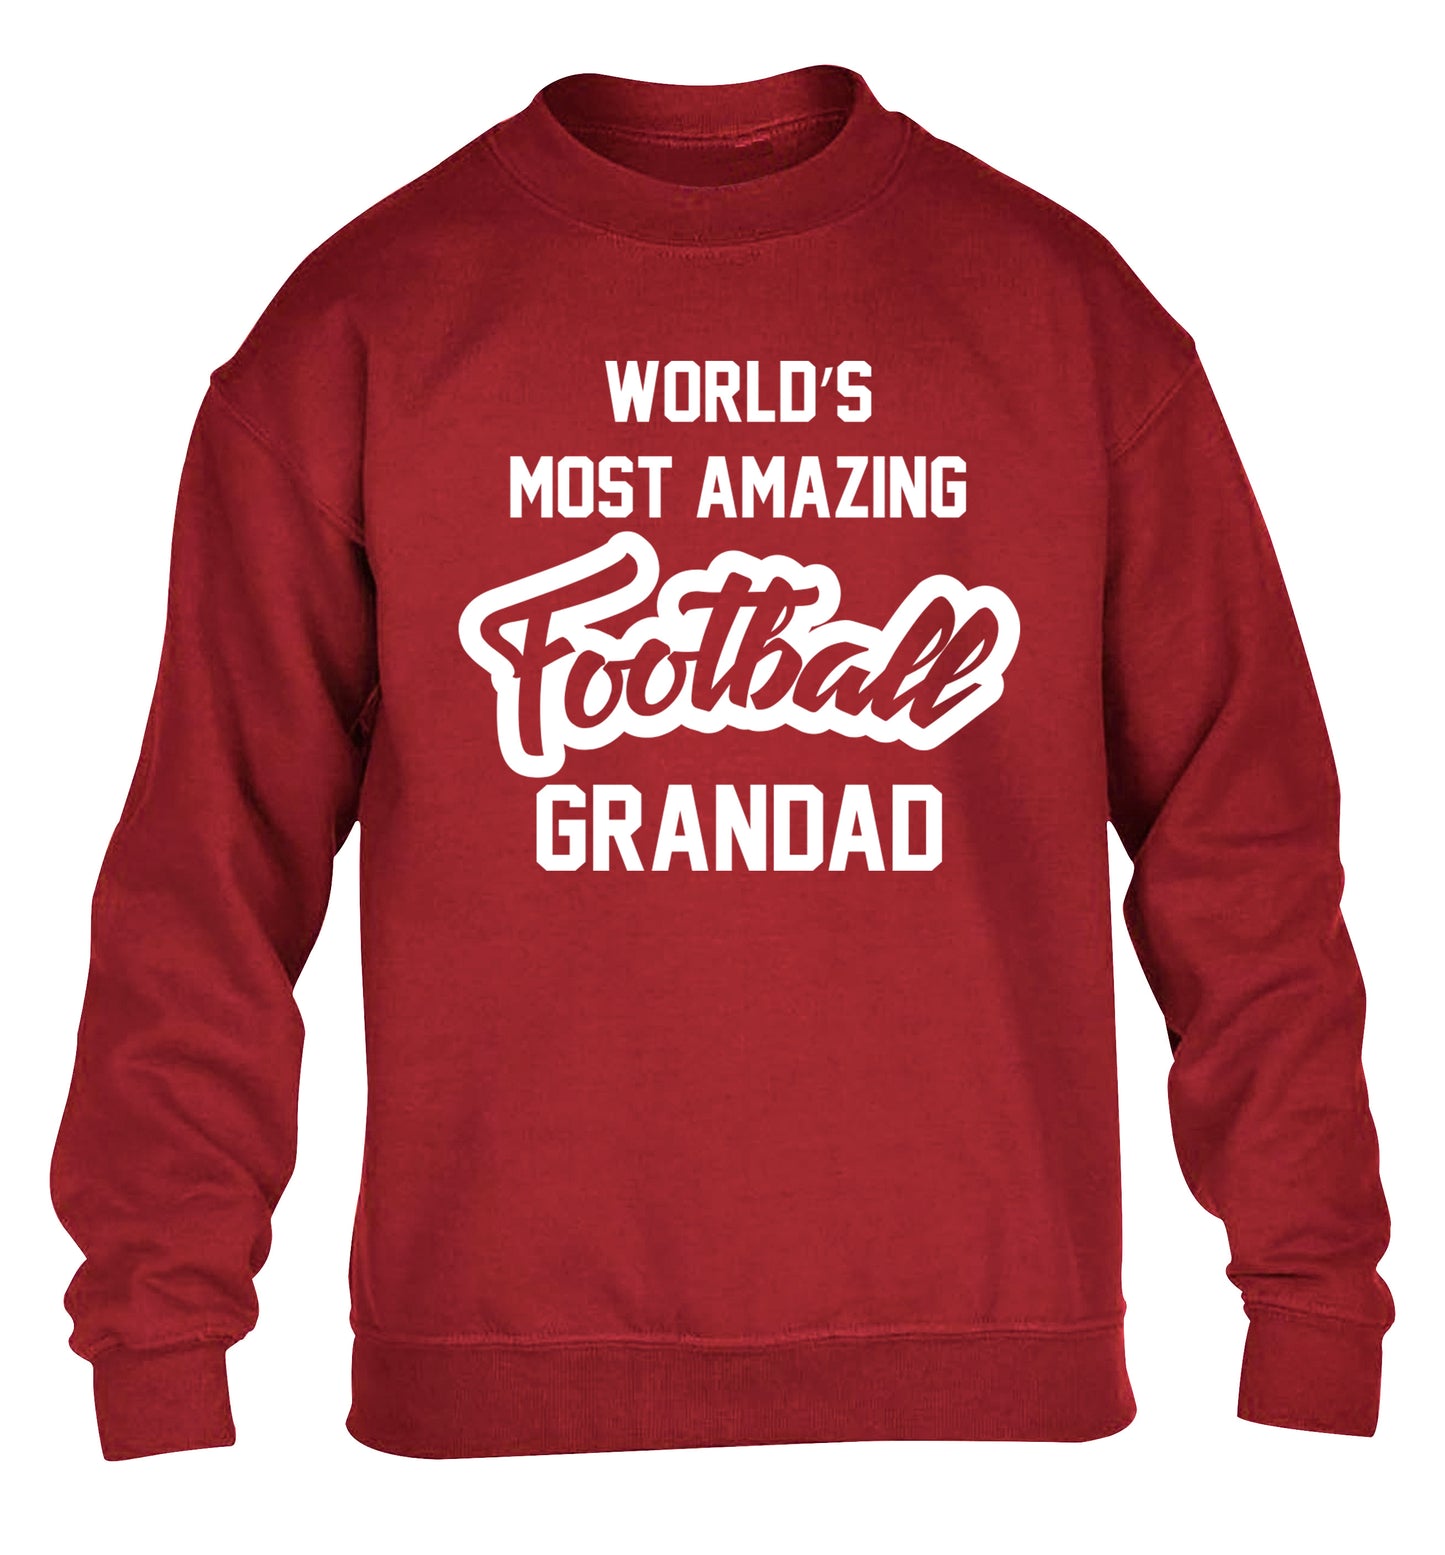 Worlds most amazing football grandad children's grey sweater 12-14 Years